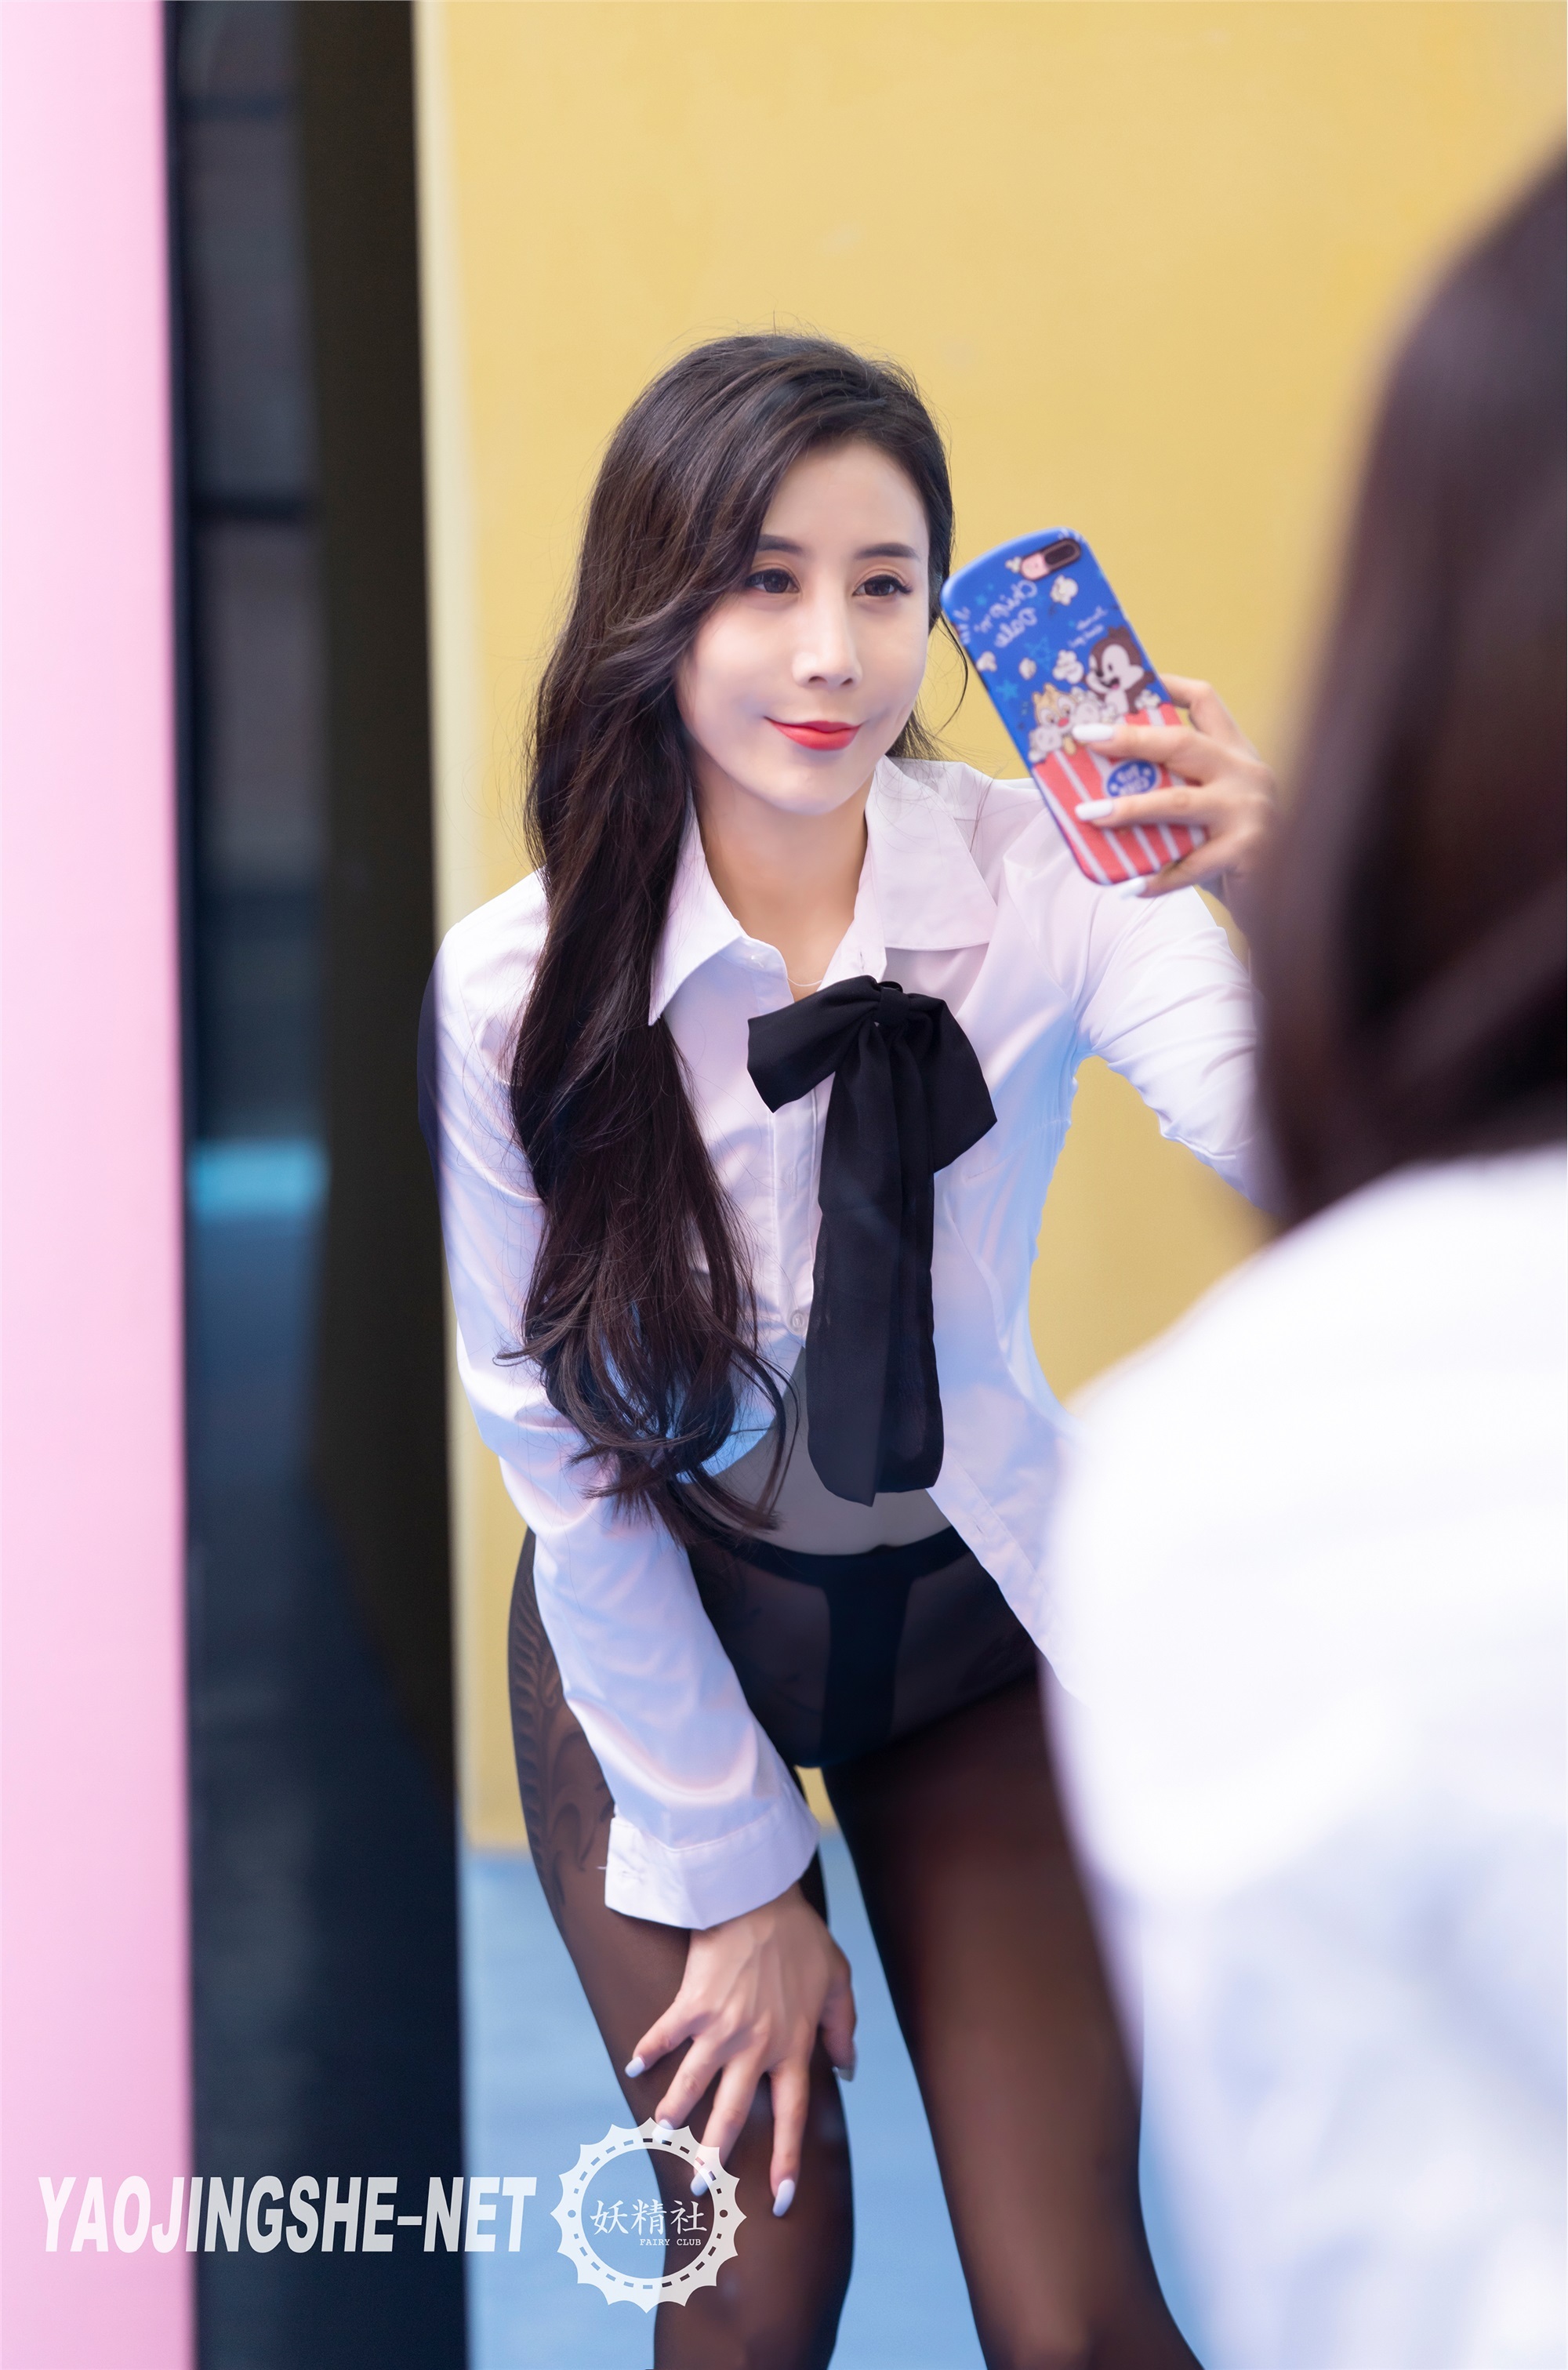 Yaojingshe goblin society September 20, 2019 v1903 Ziyan's selfie